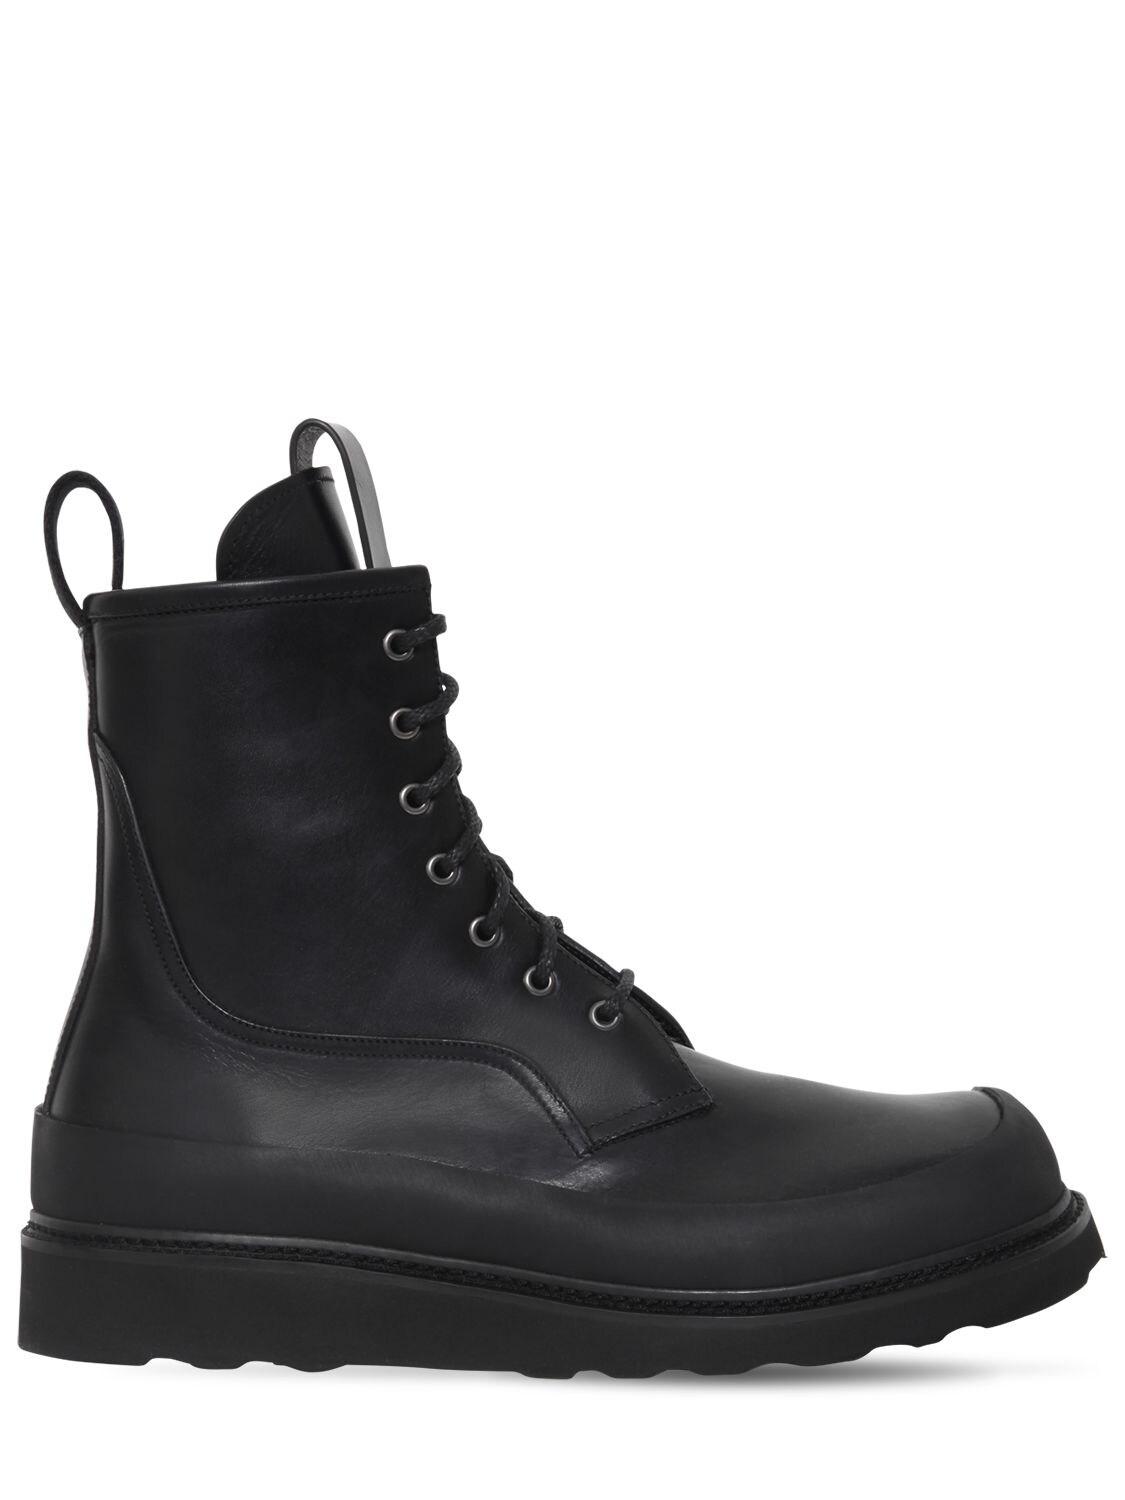 Bottega Veneta Leather Lace-up Work Boots in Black for Men - Lyst